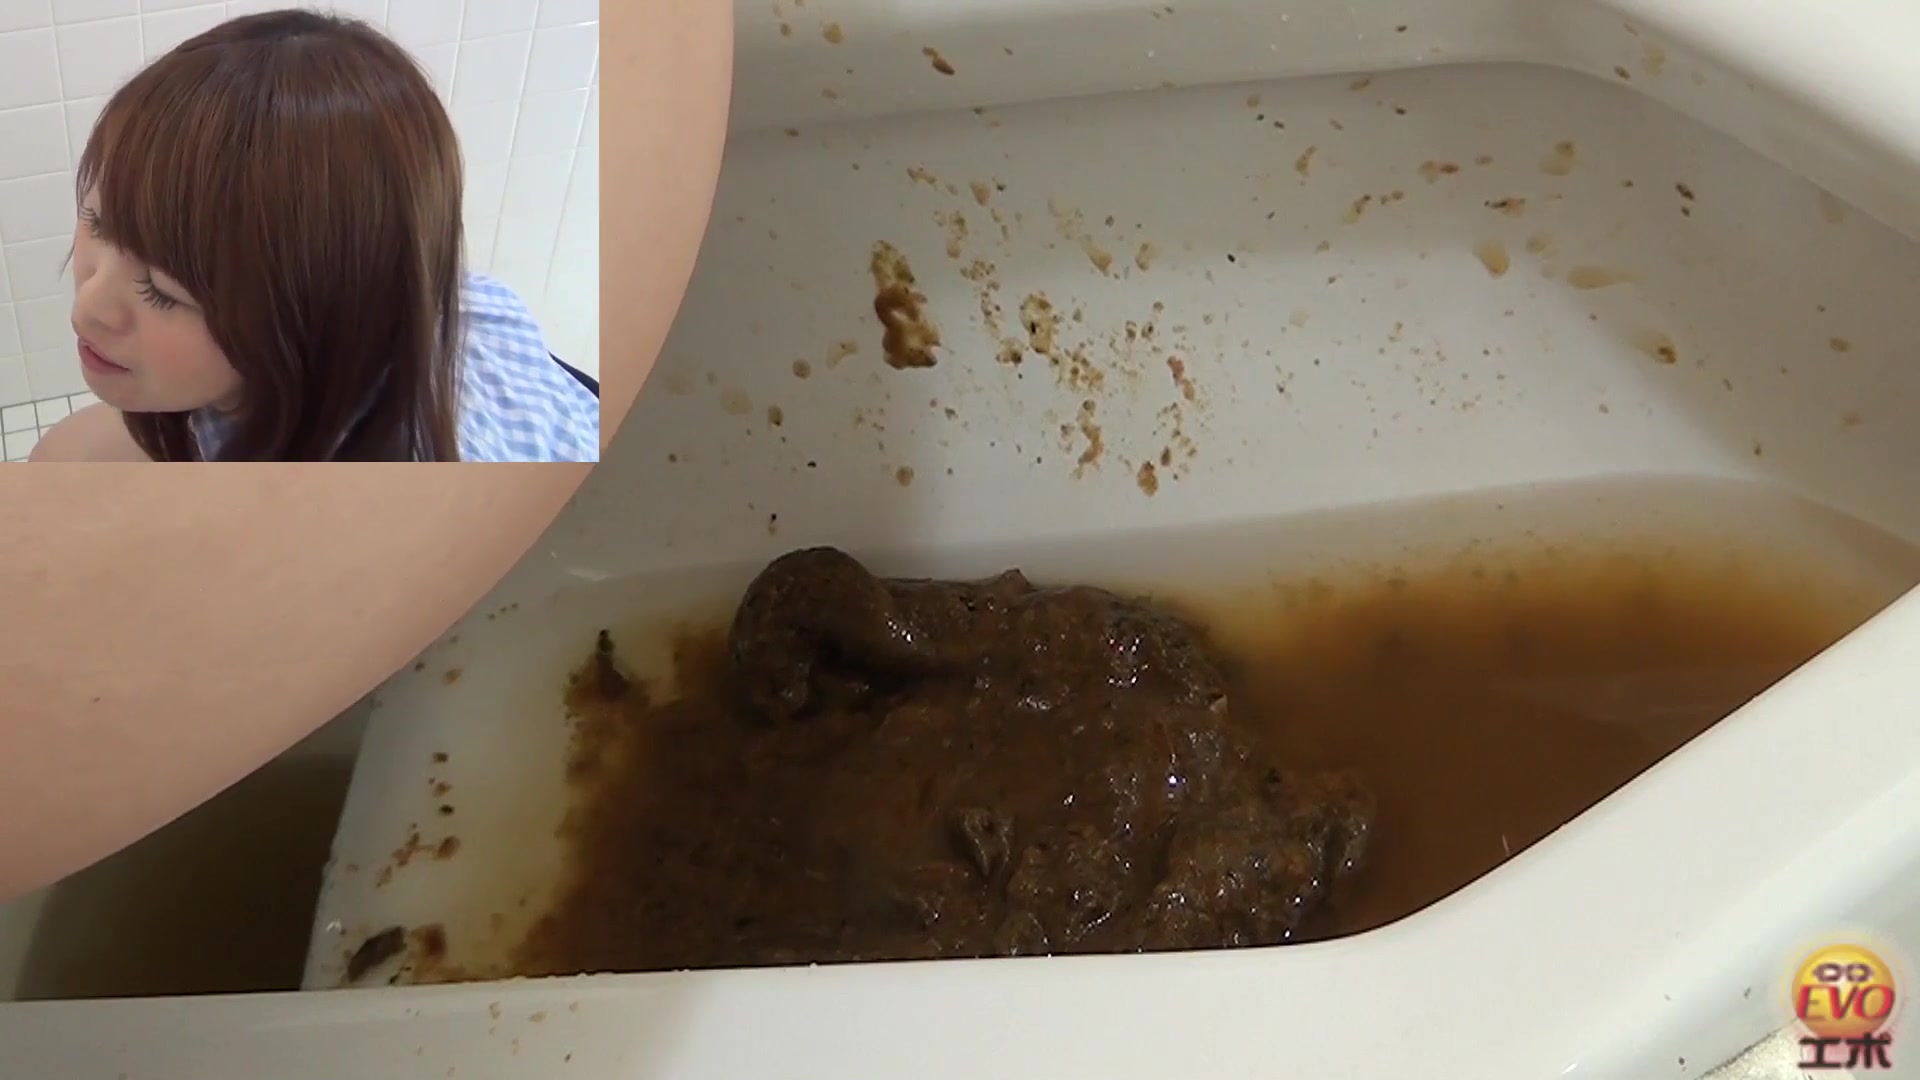 Diarrhea in public bathroom - video 2